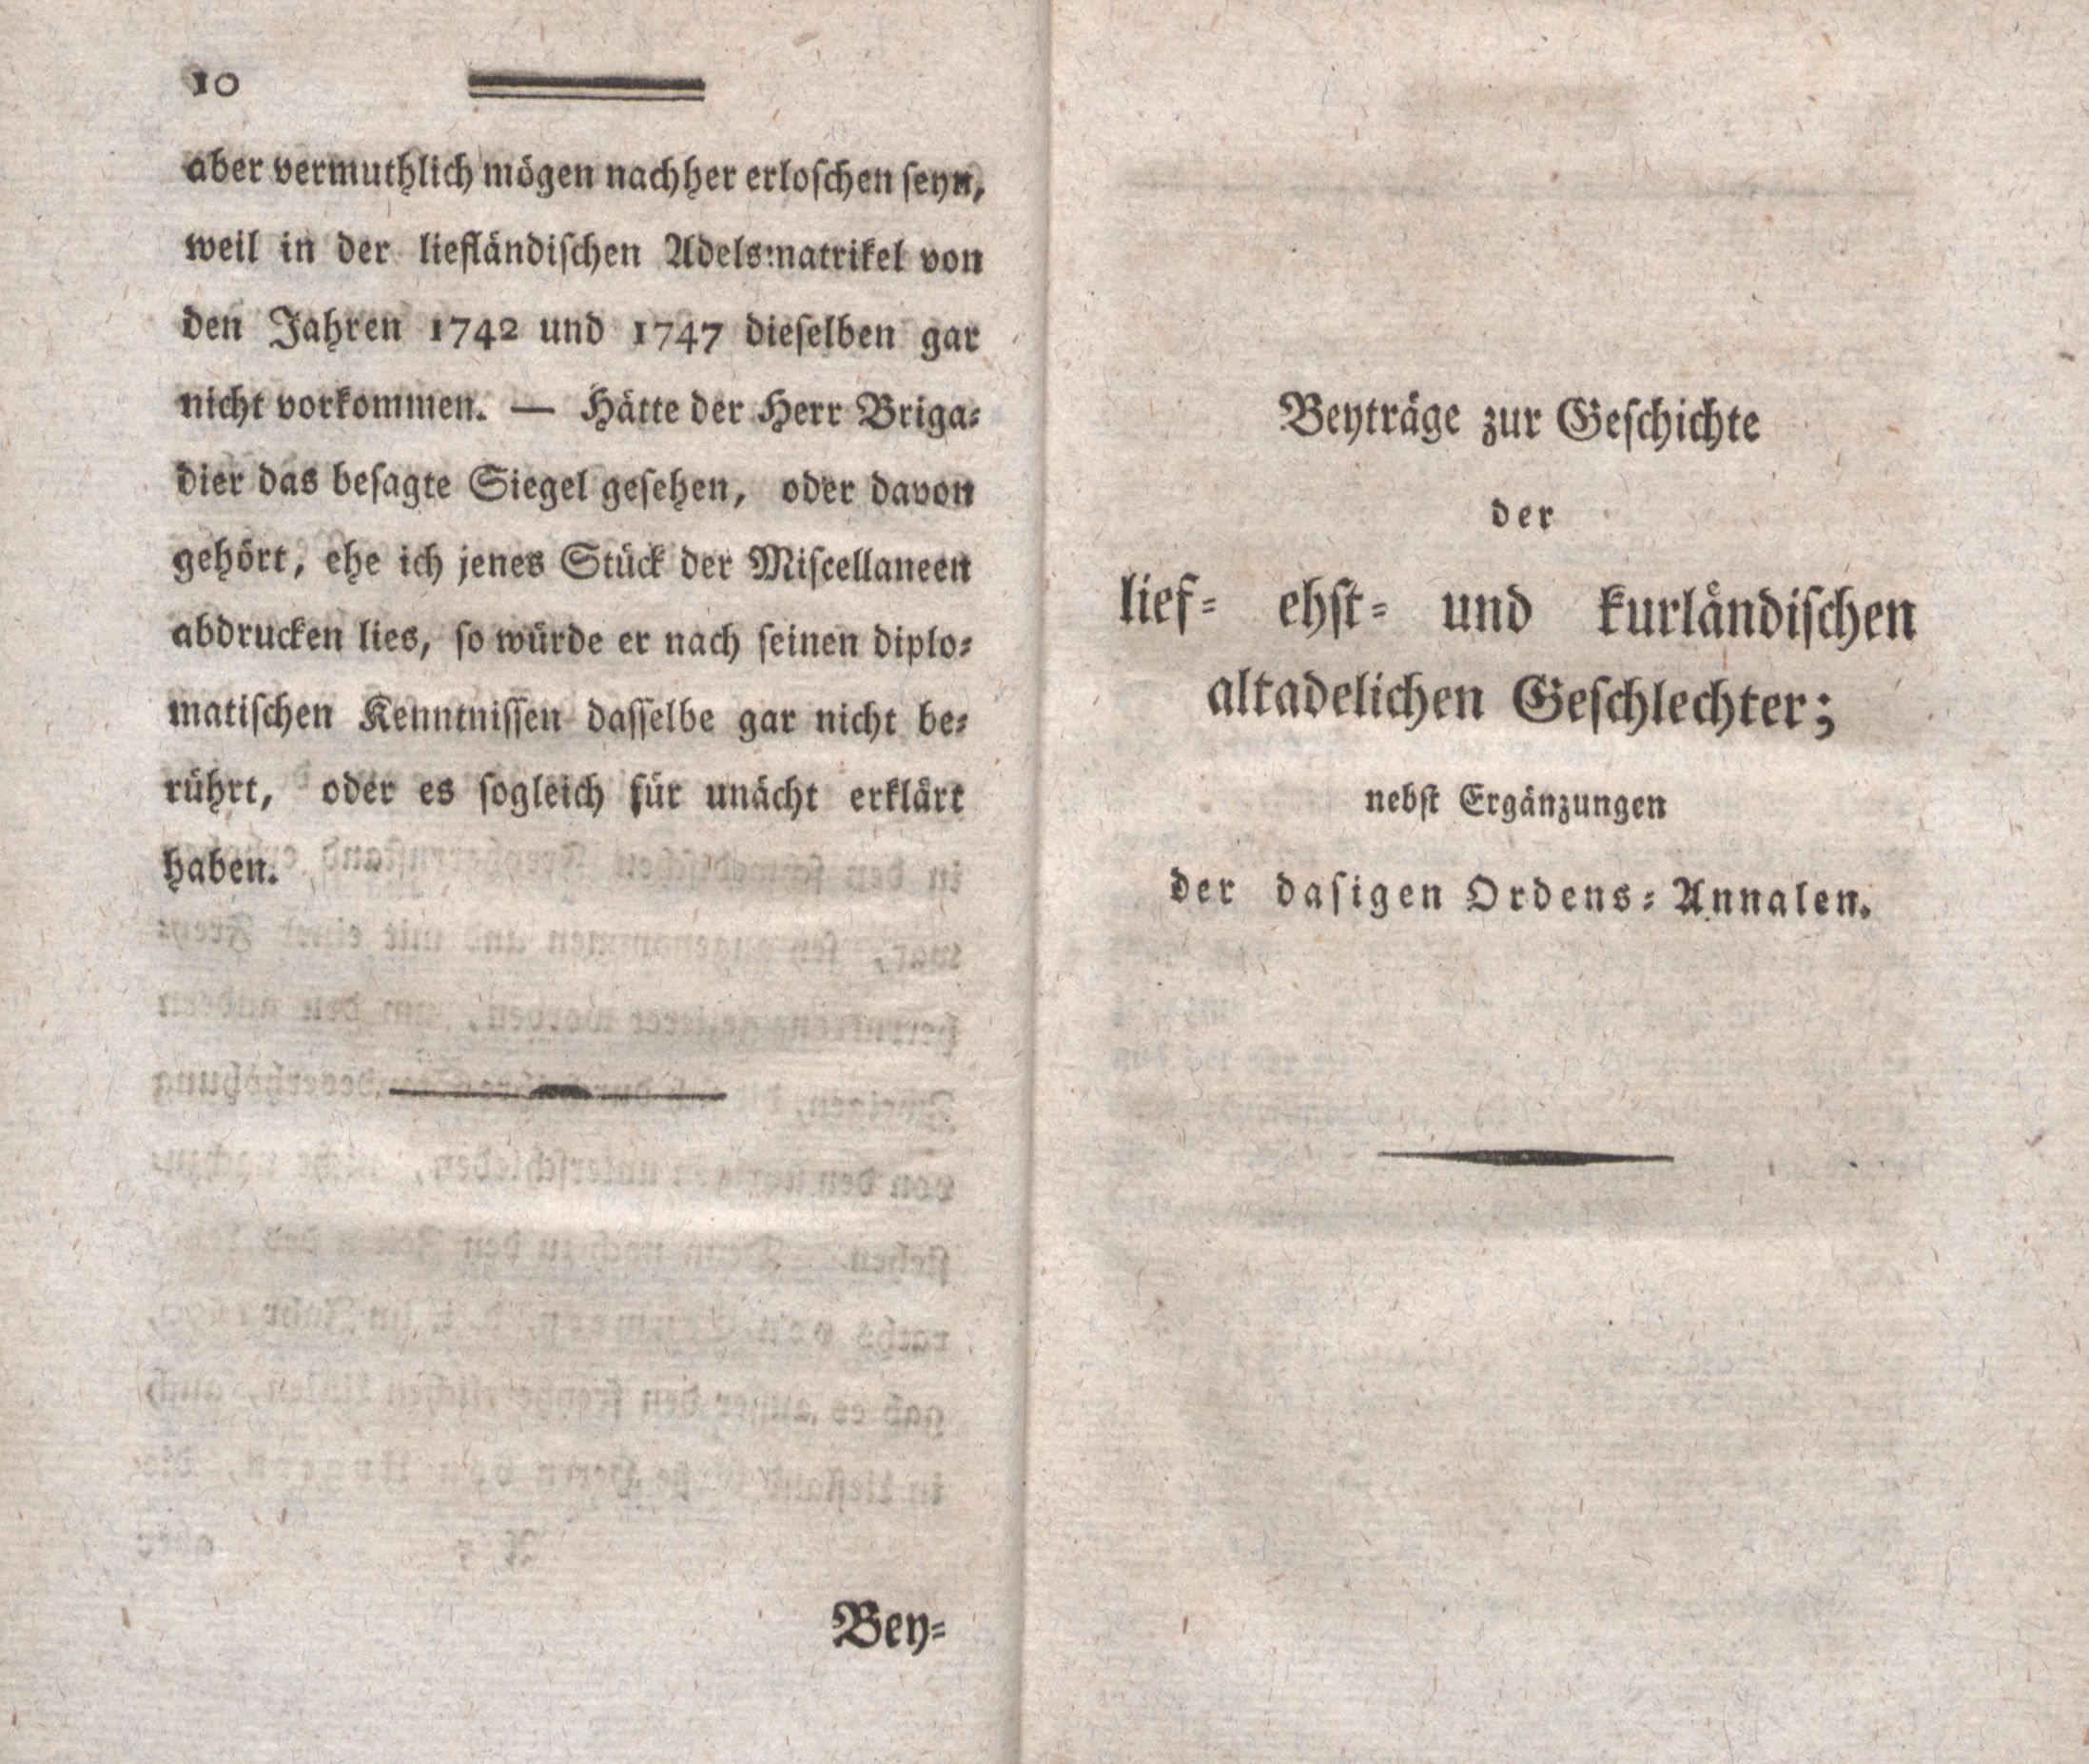 Neue nordische Miscellaneen [09-10] (1794) | 7. (10-11) Foreword, Main body of text